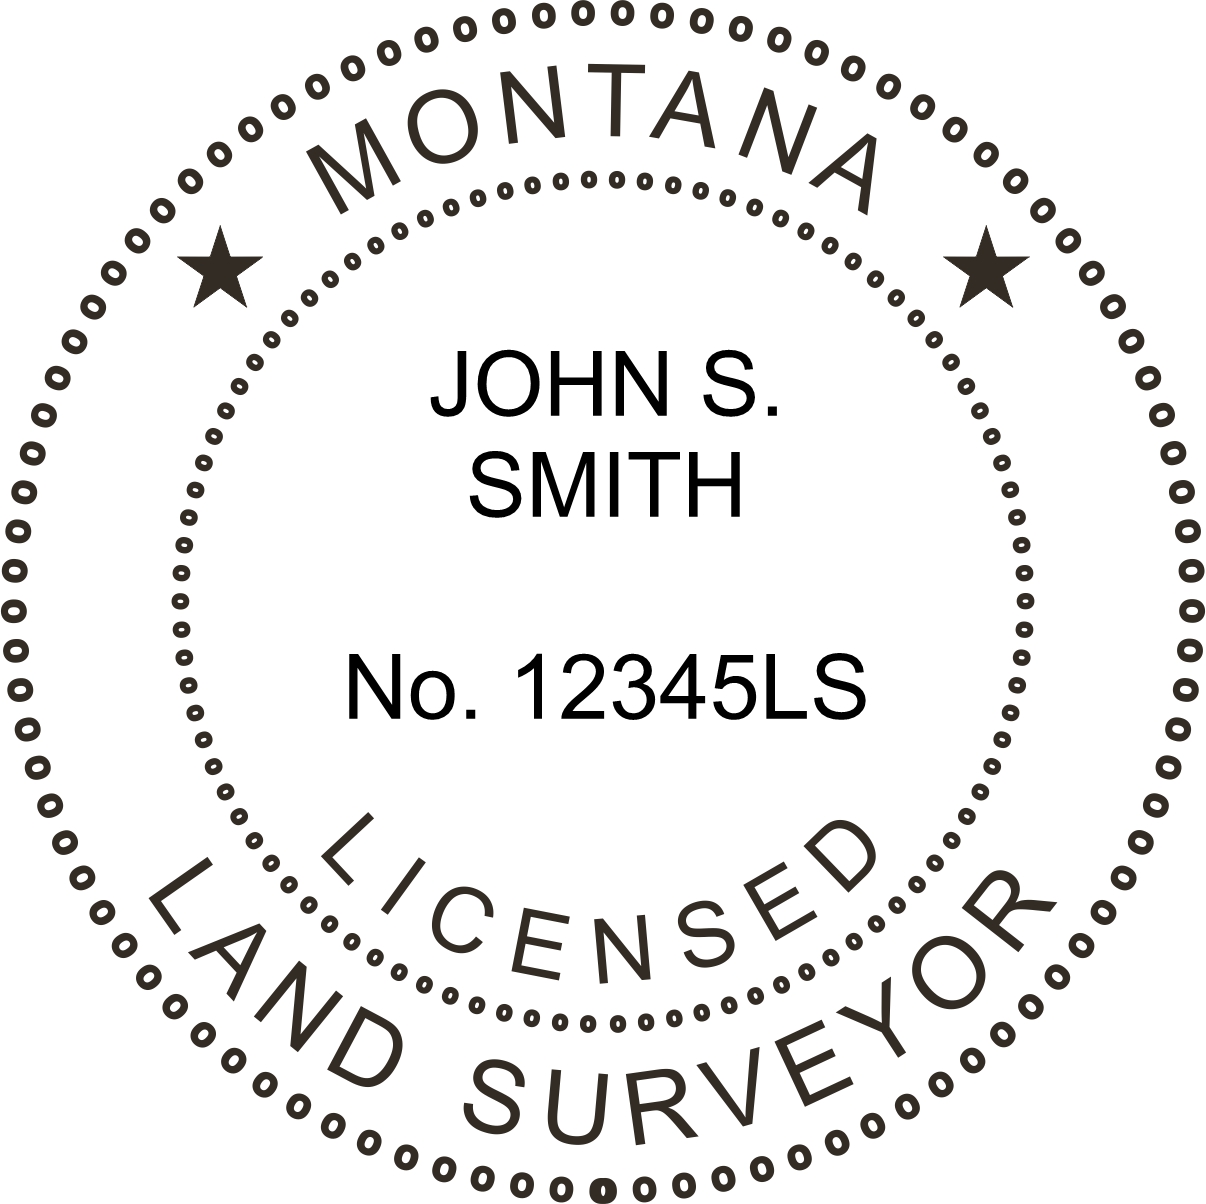 land surveyor seal - pocket - montana